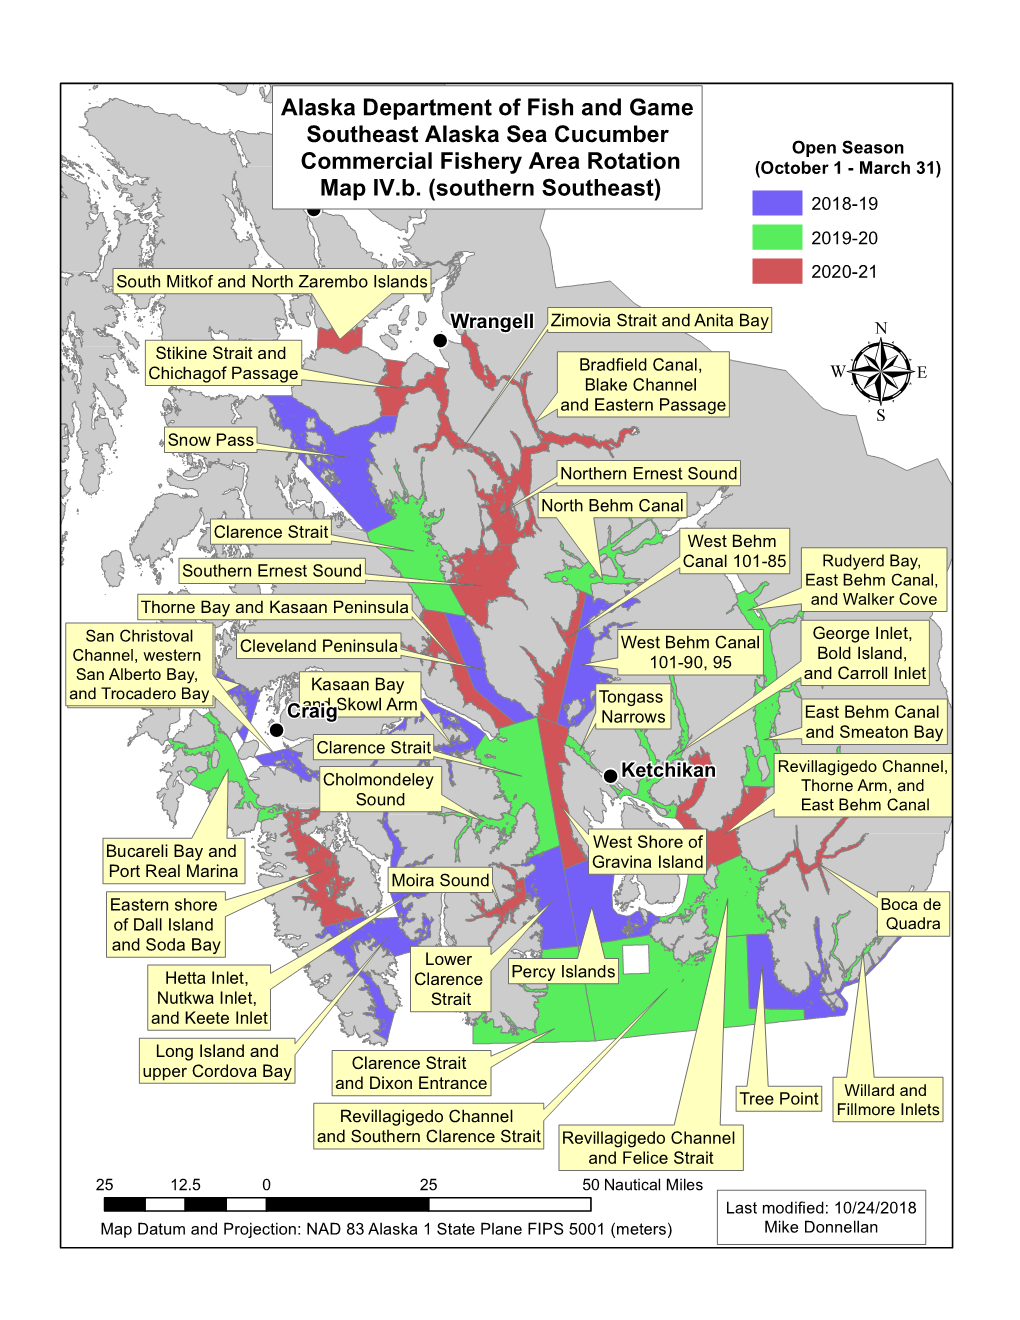 Southeast Alaska Sea Cucumber Commercial Fishery Area Rotation